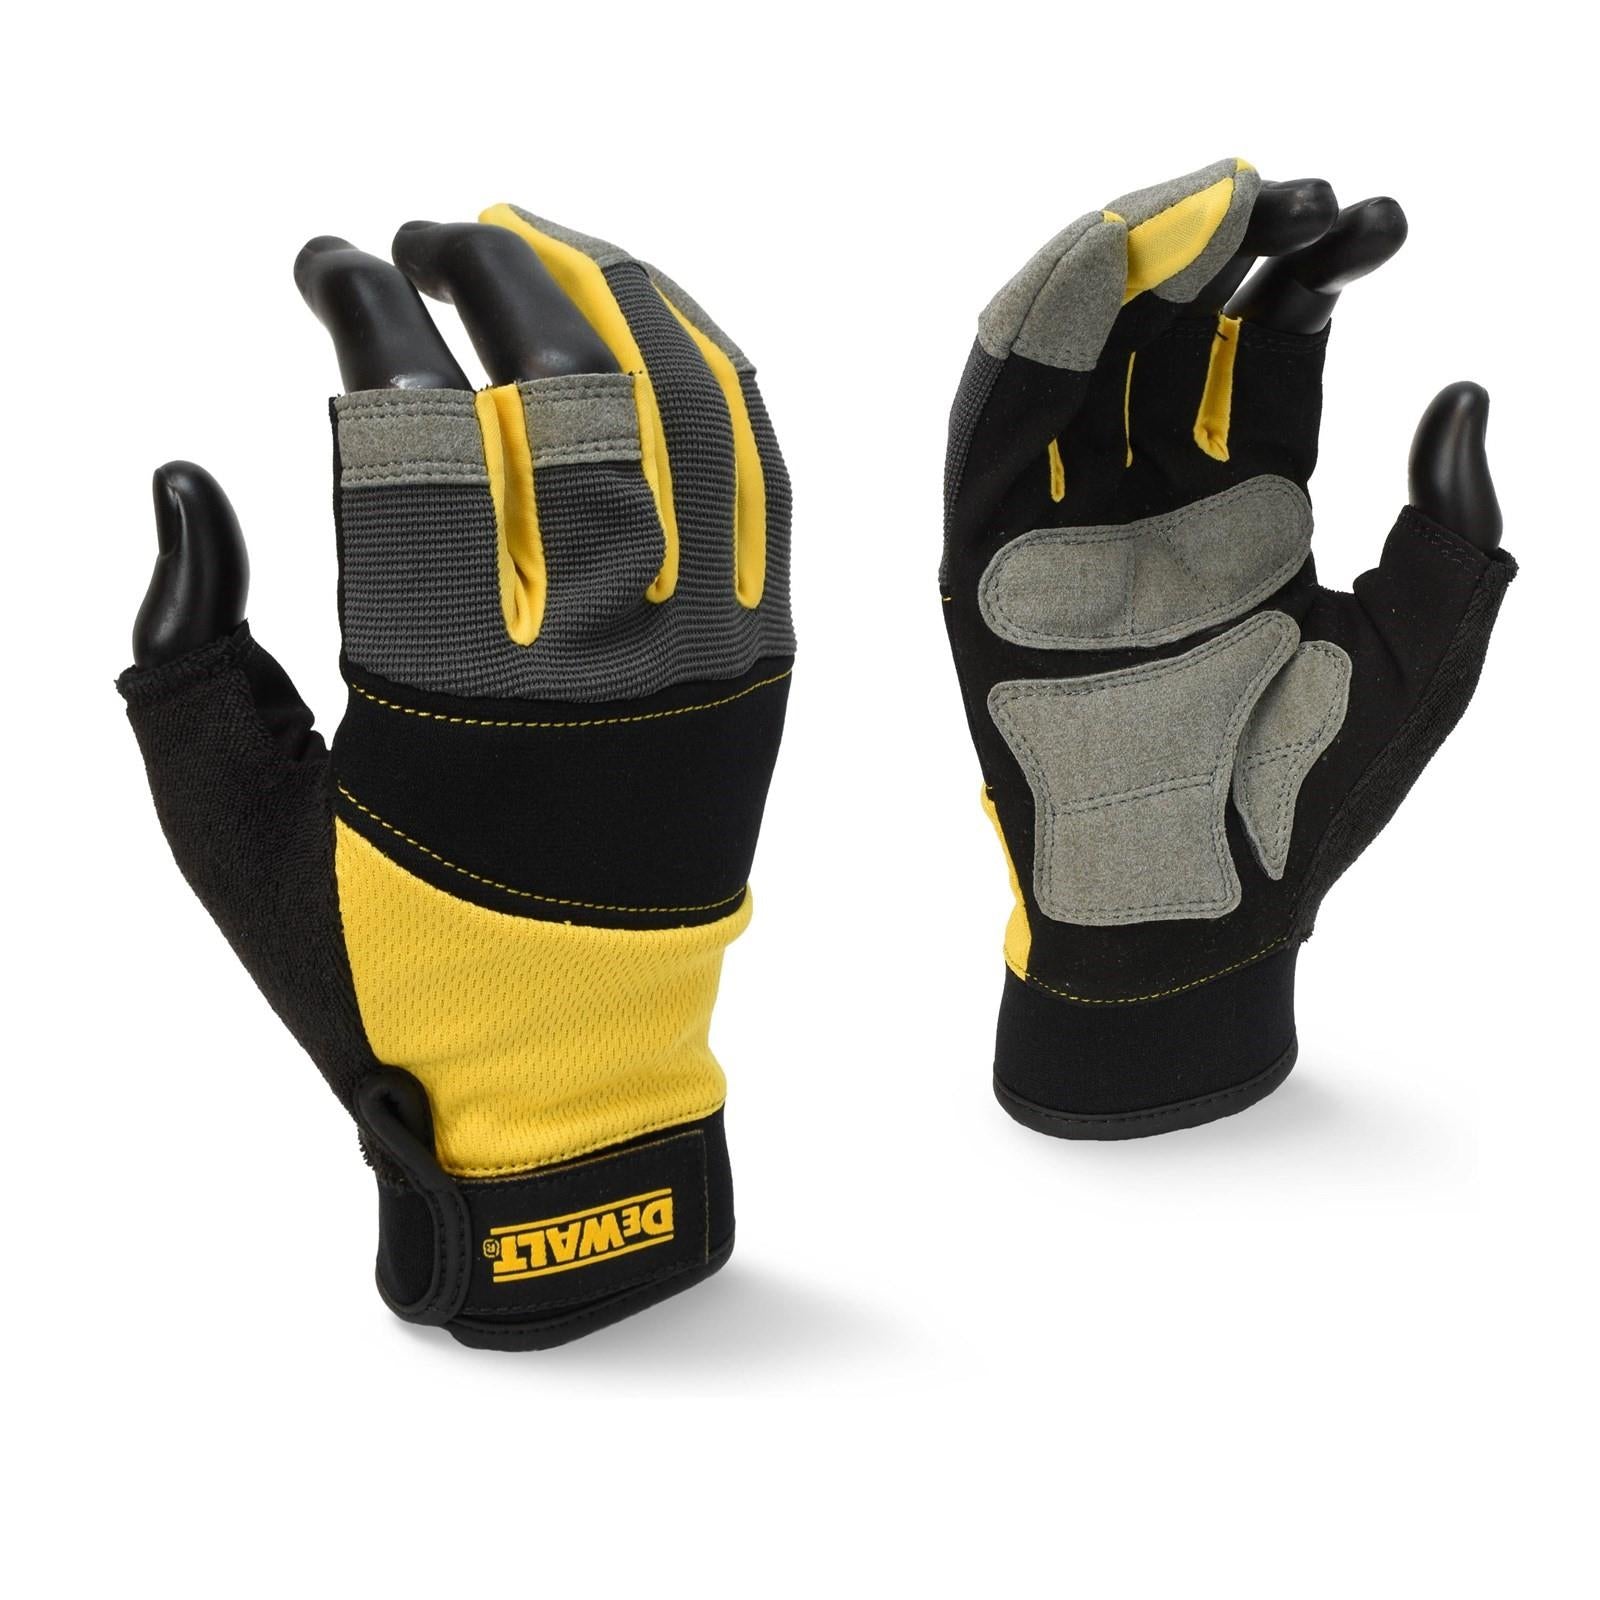 DeWalt Performance Framer three half finger work glove #DPG214L